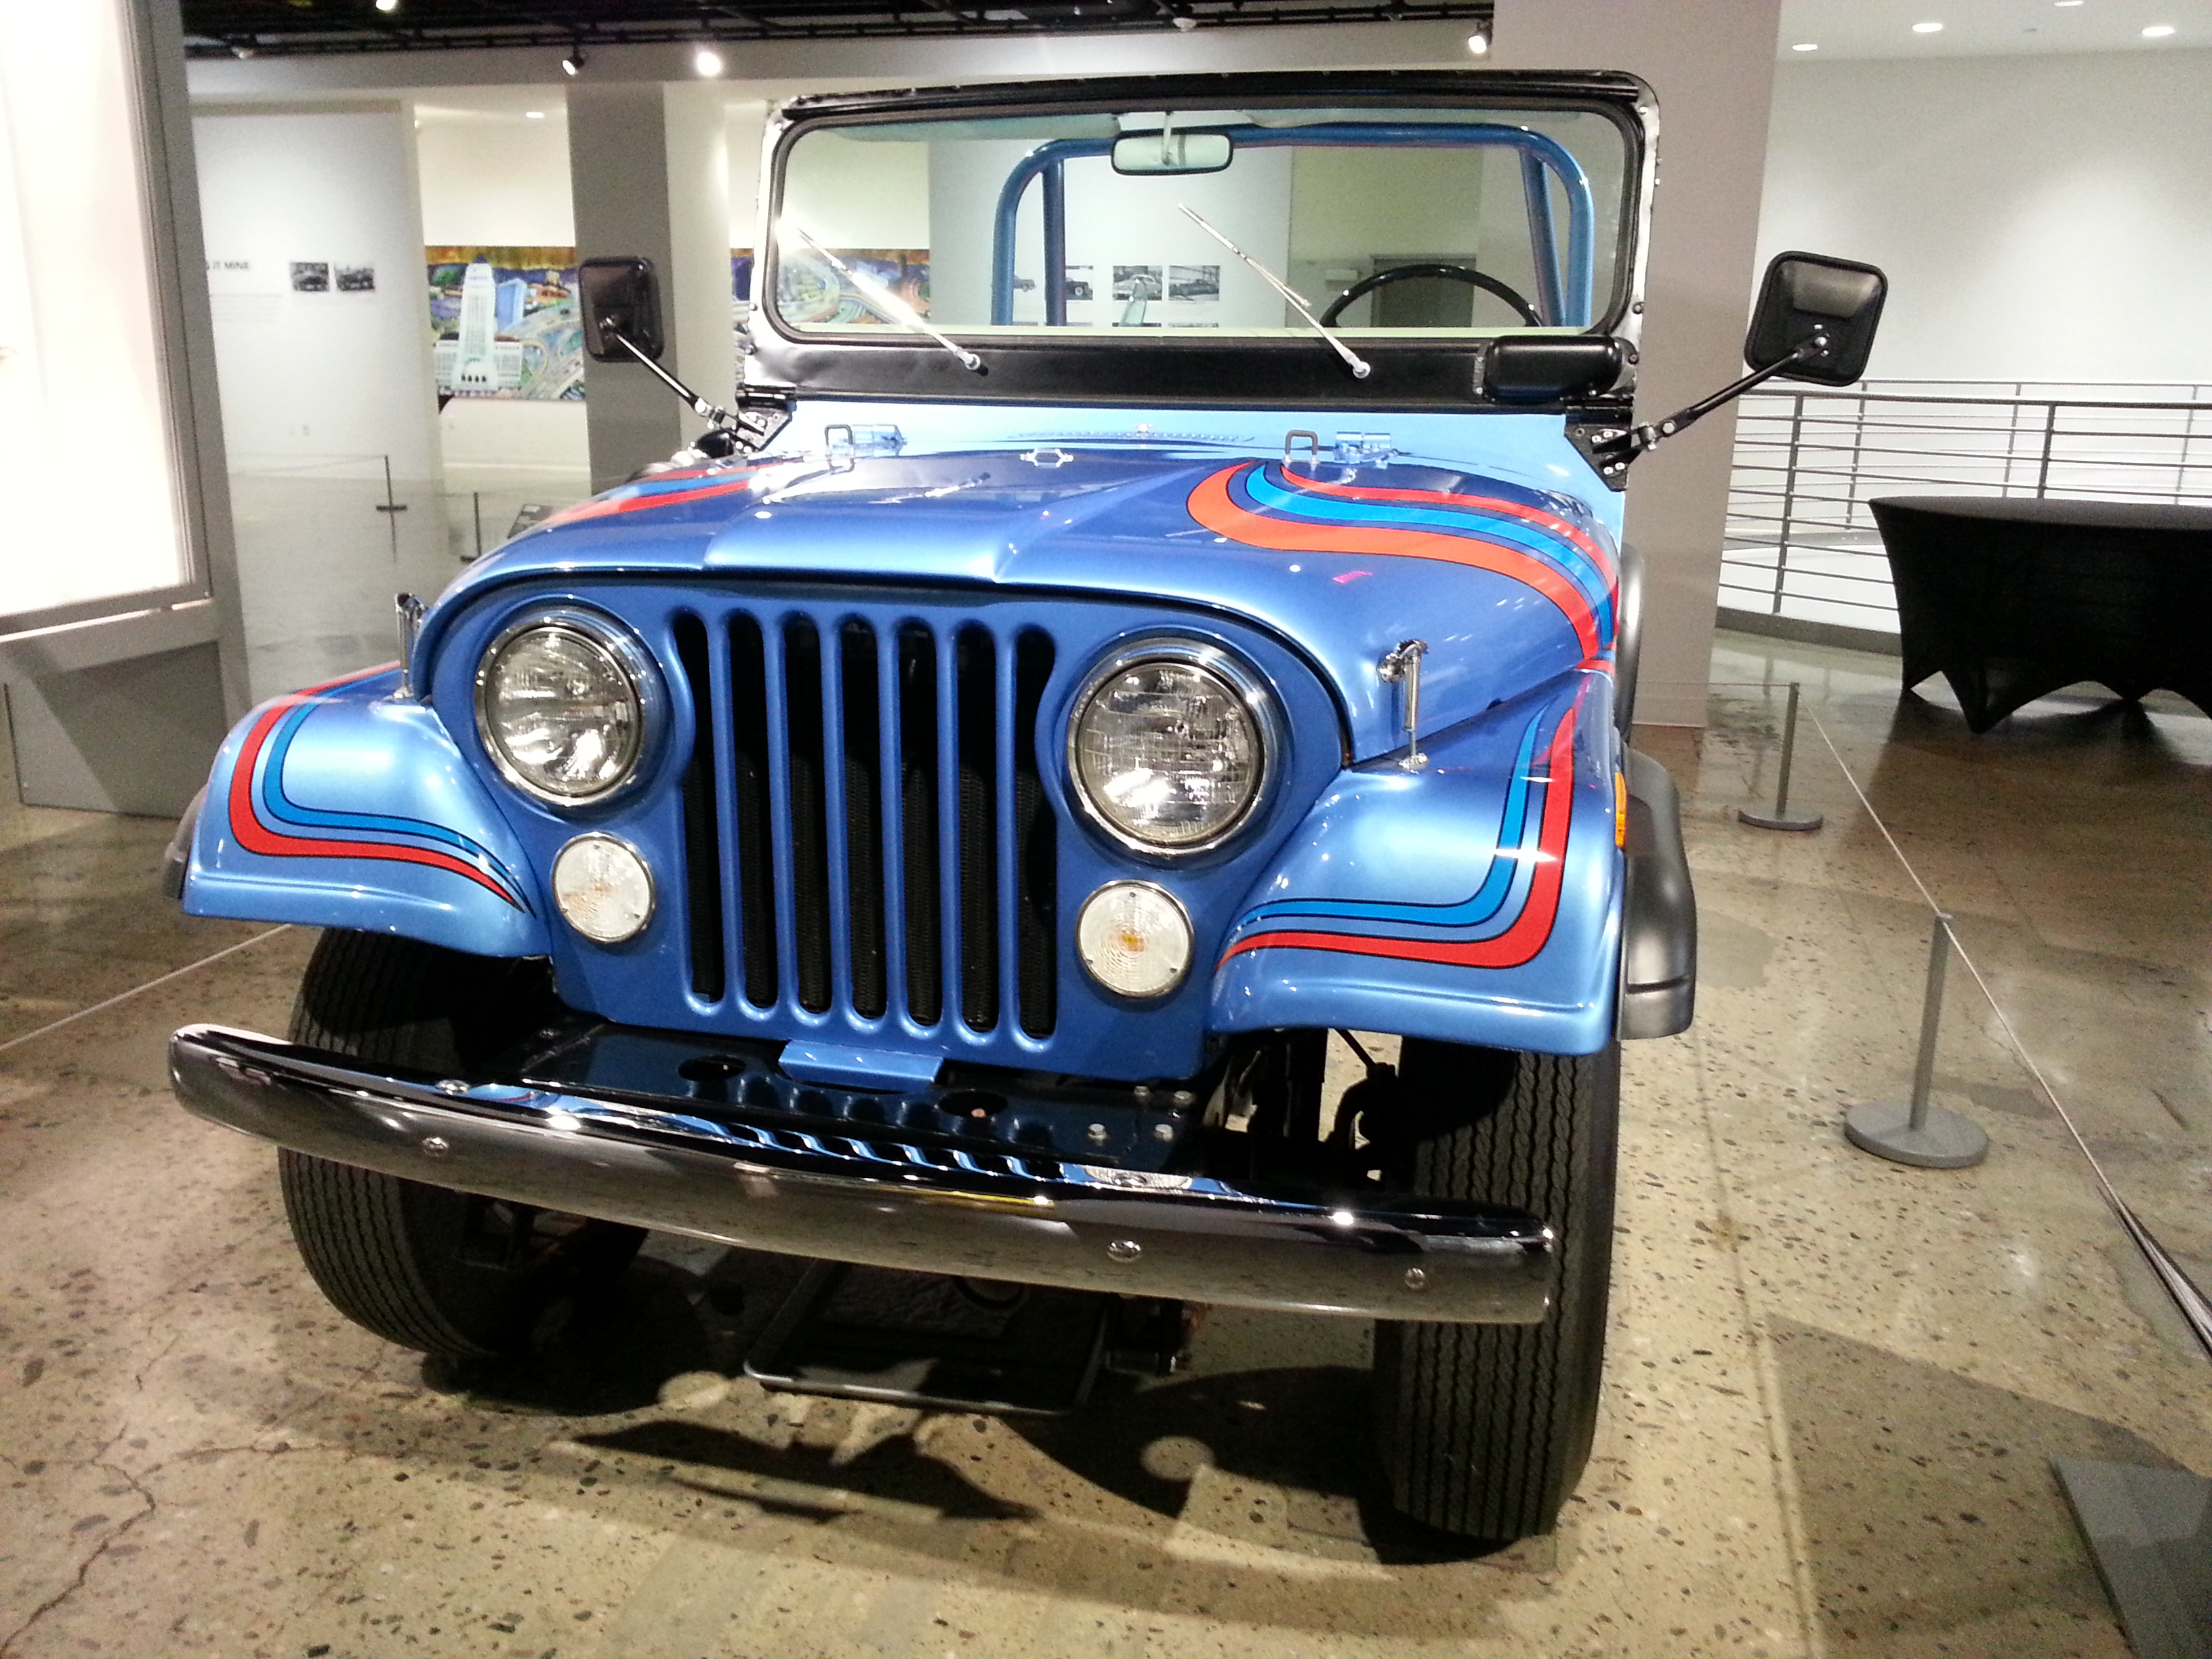 Super Jeep JK Forum at the Petersen Automotive Museum